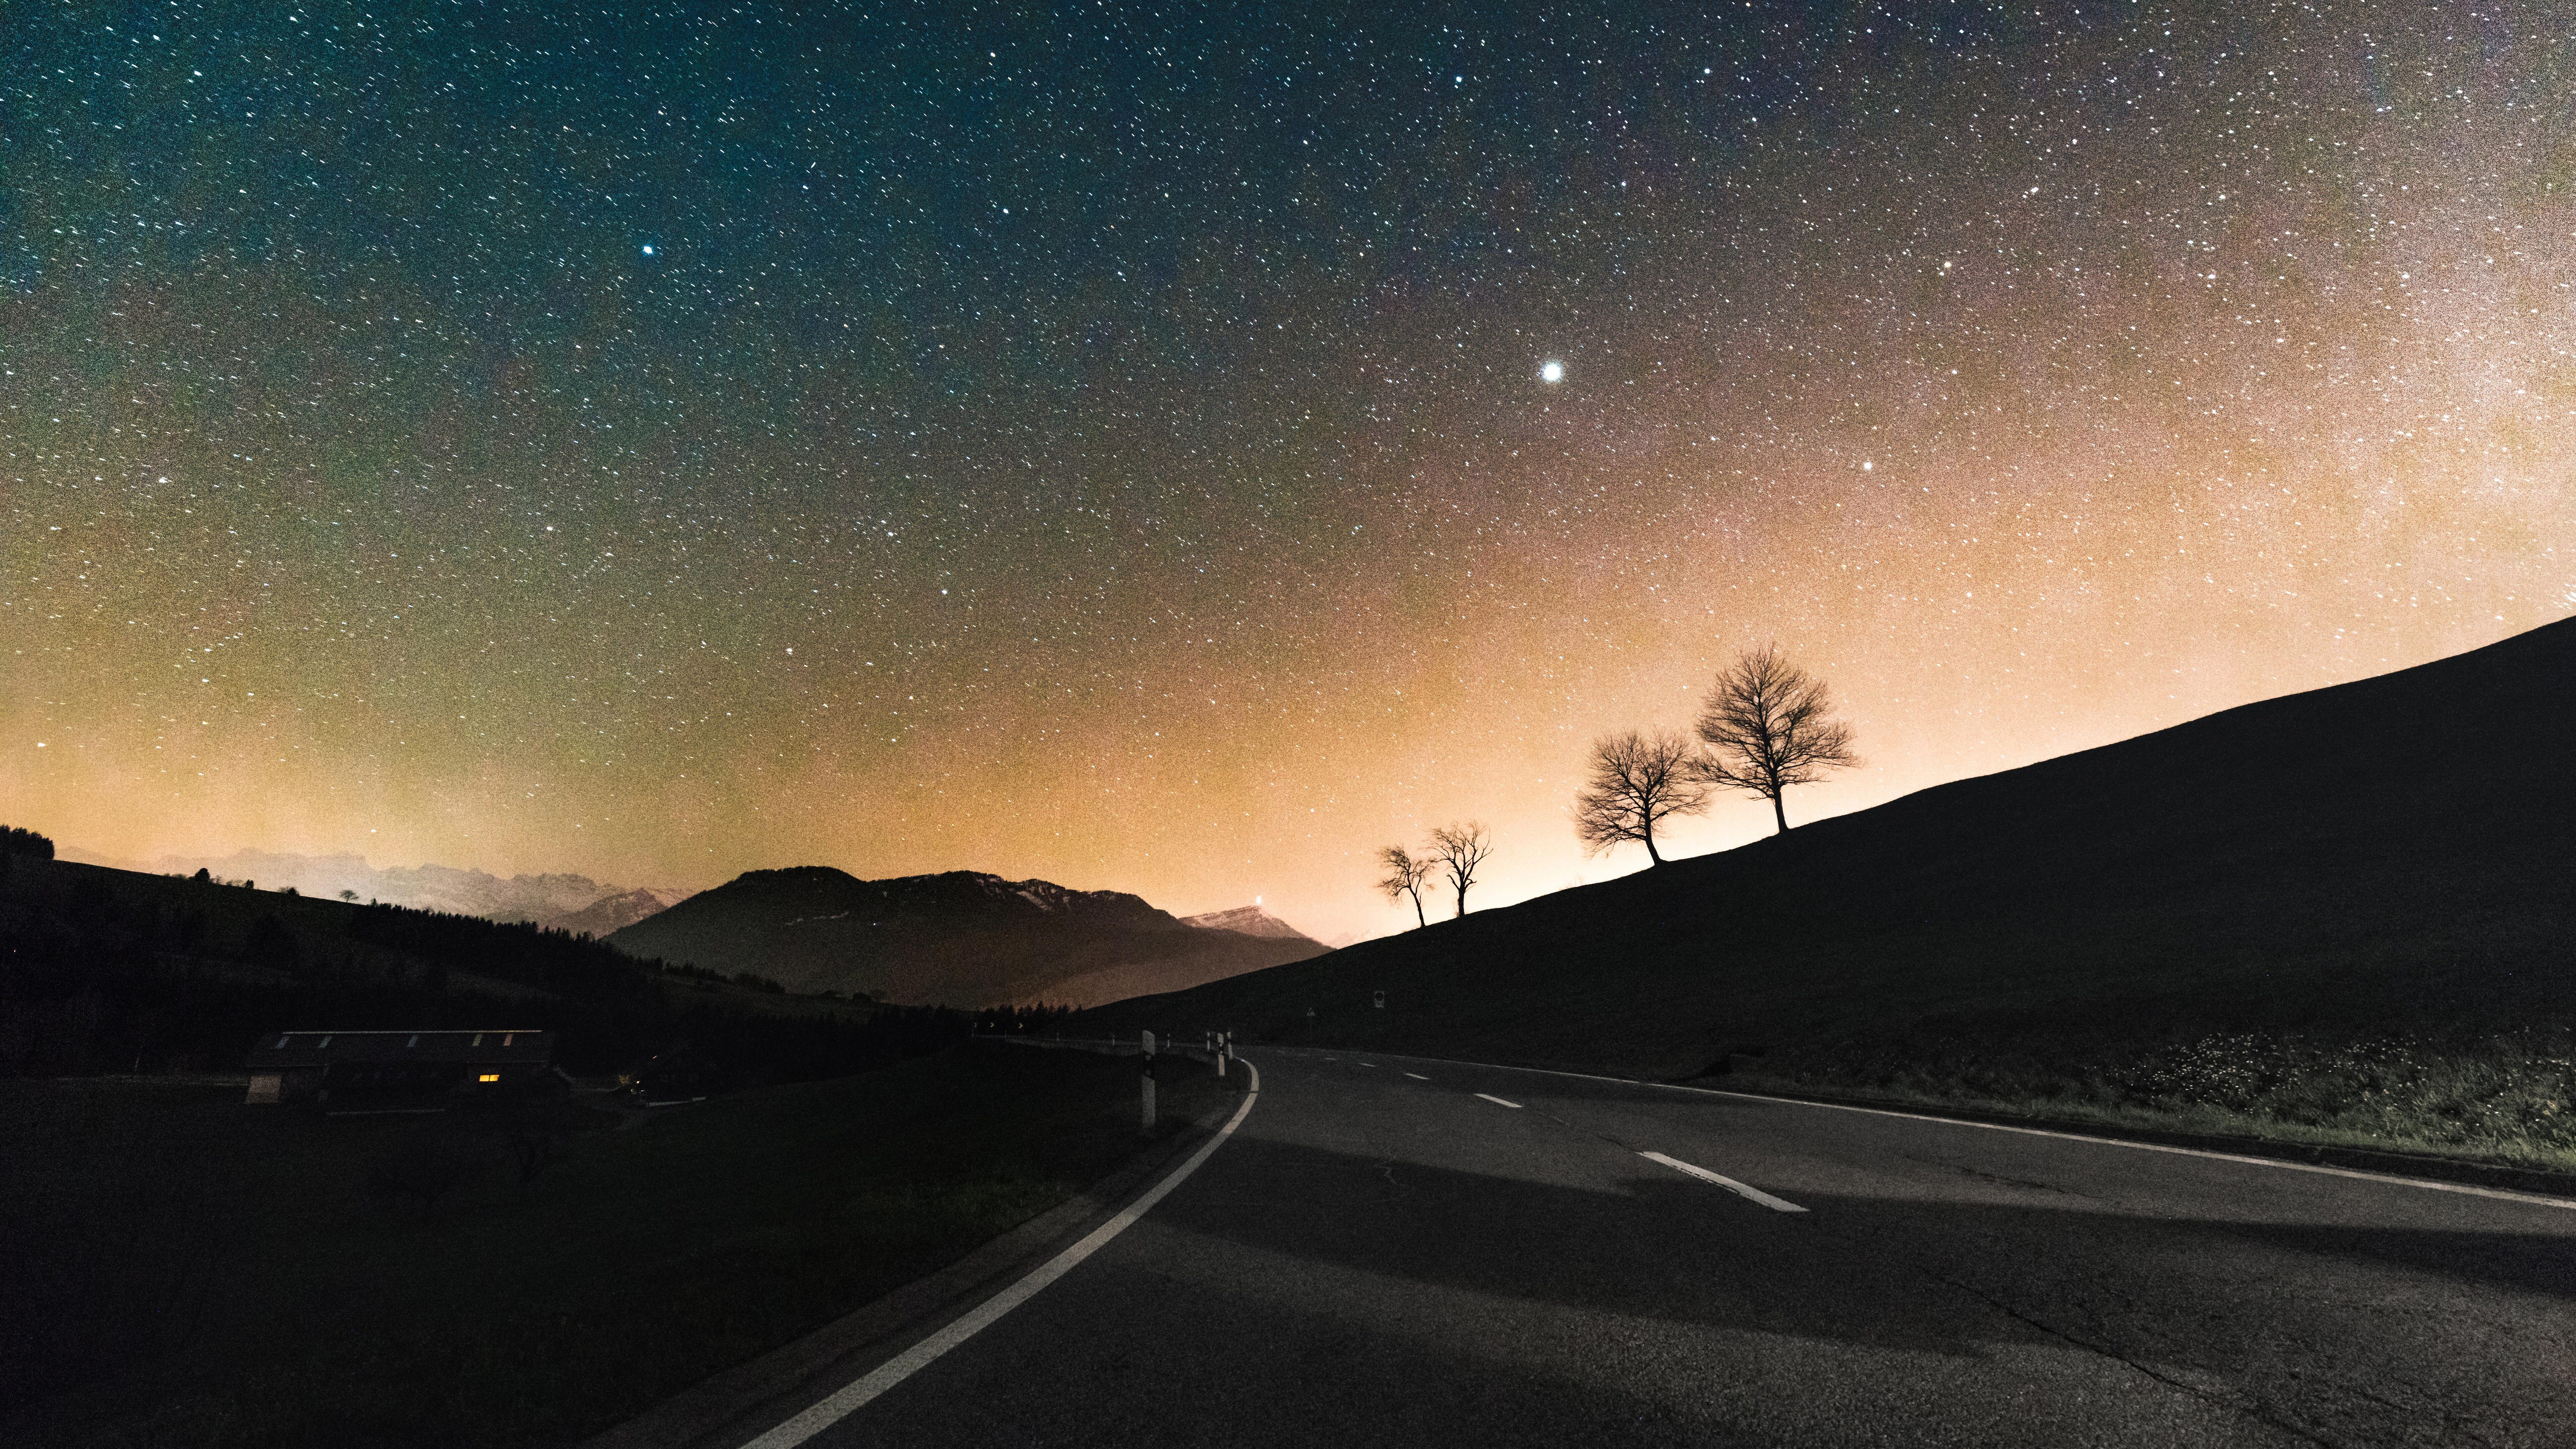 sky-full-of-stars-road-down-to-hill-8k-lc.jpg